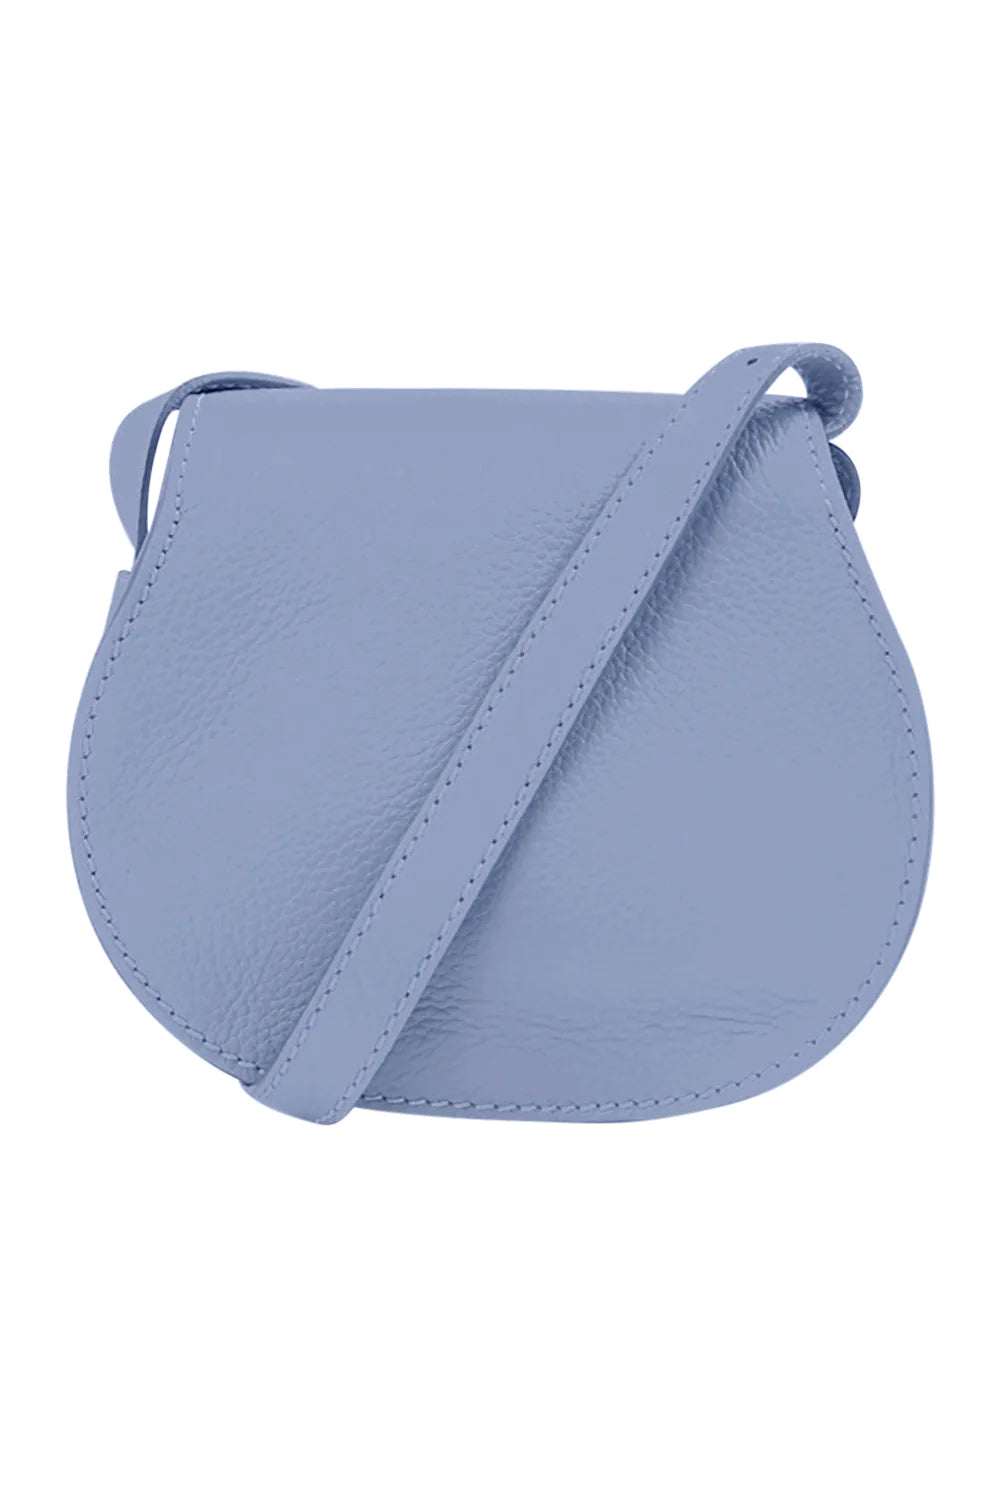 CHLOE BAGS BLUE MARCIE SMALL BAG | SHADY COBALT